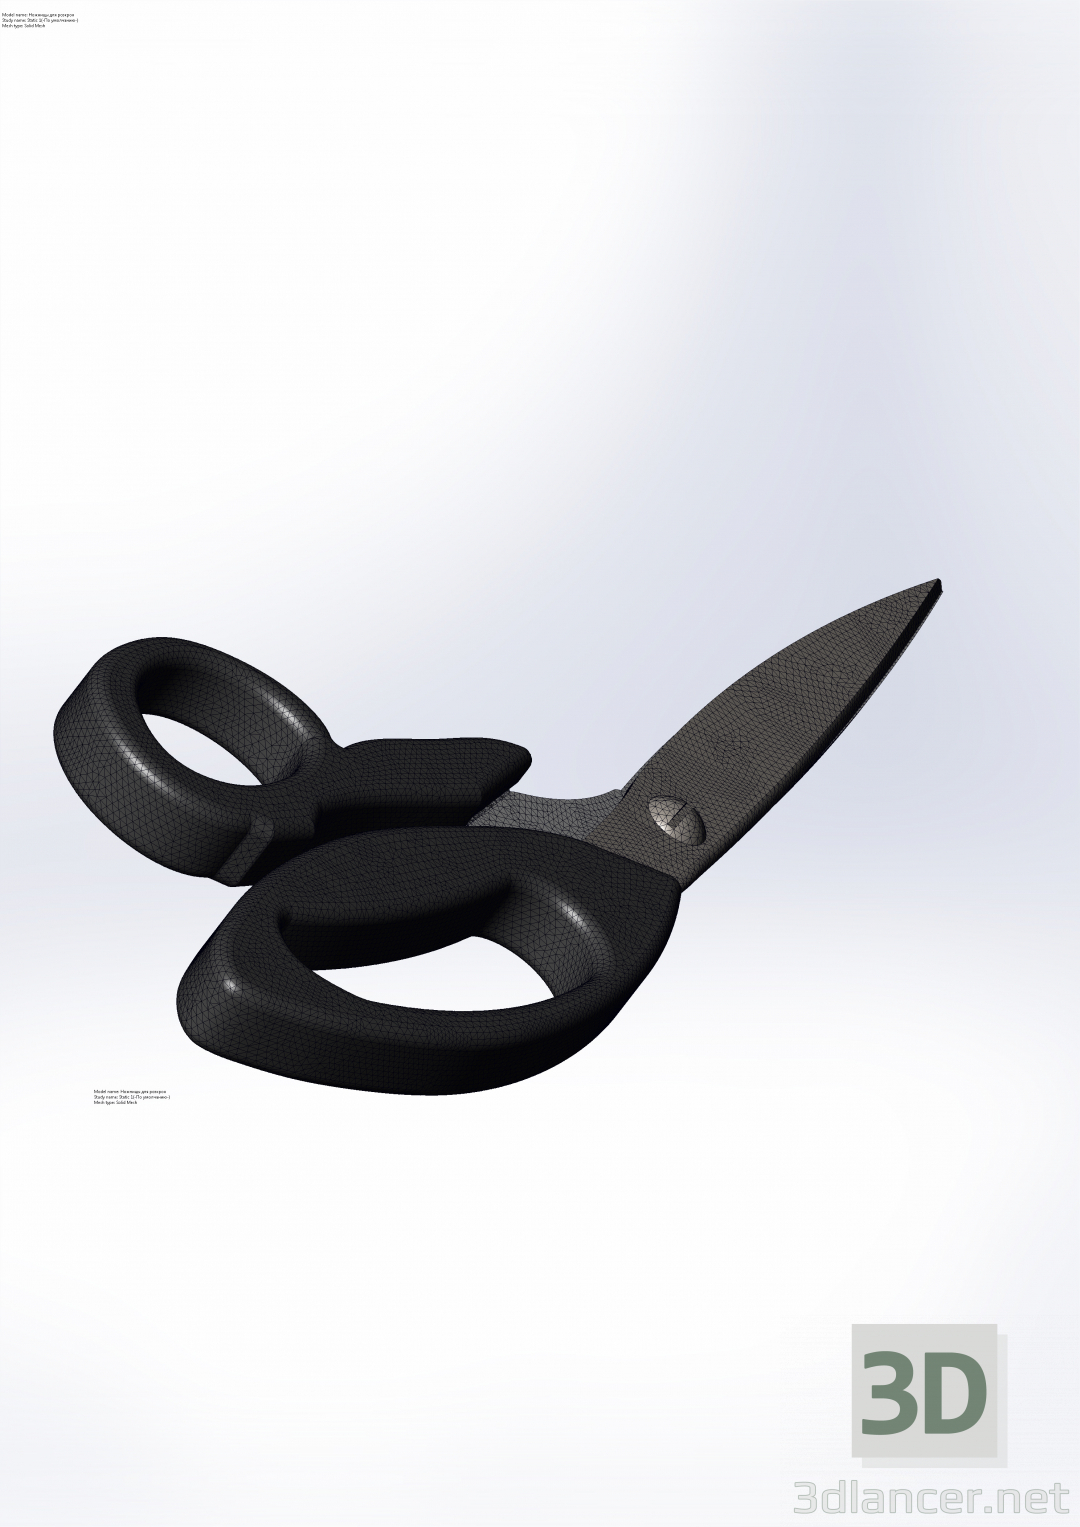 3d Fabric cutting scissors model buy - render